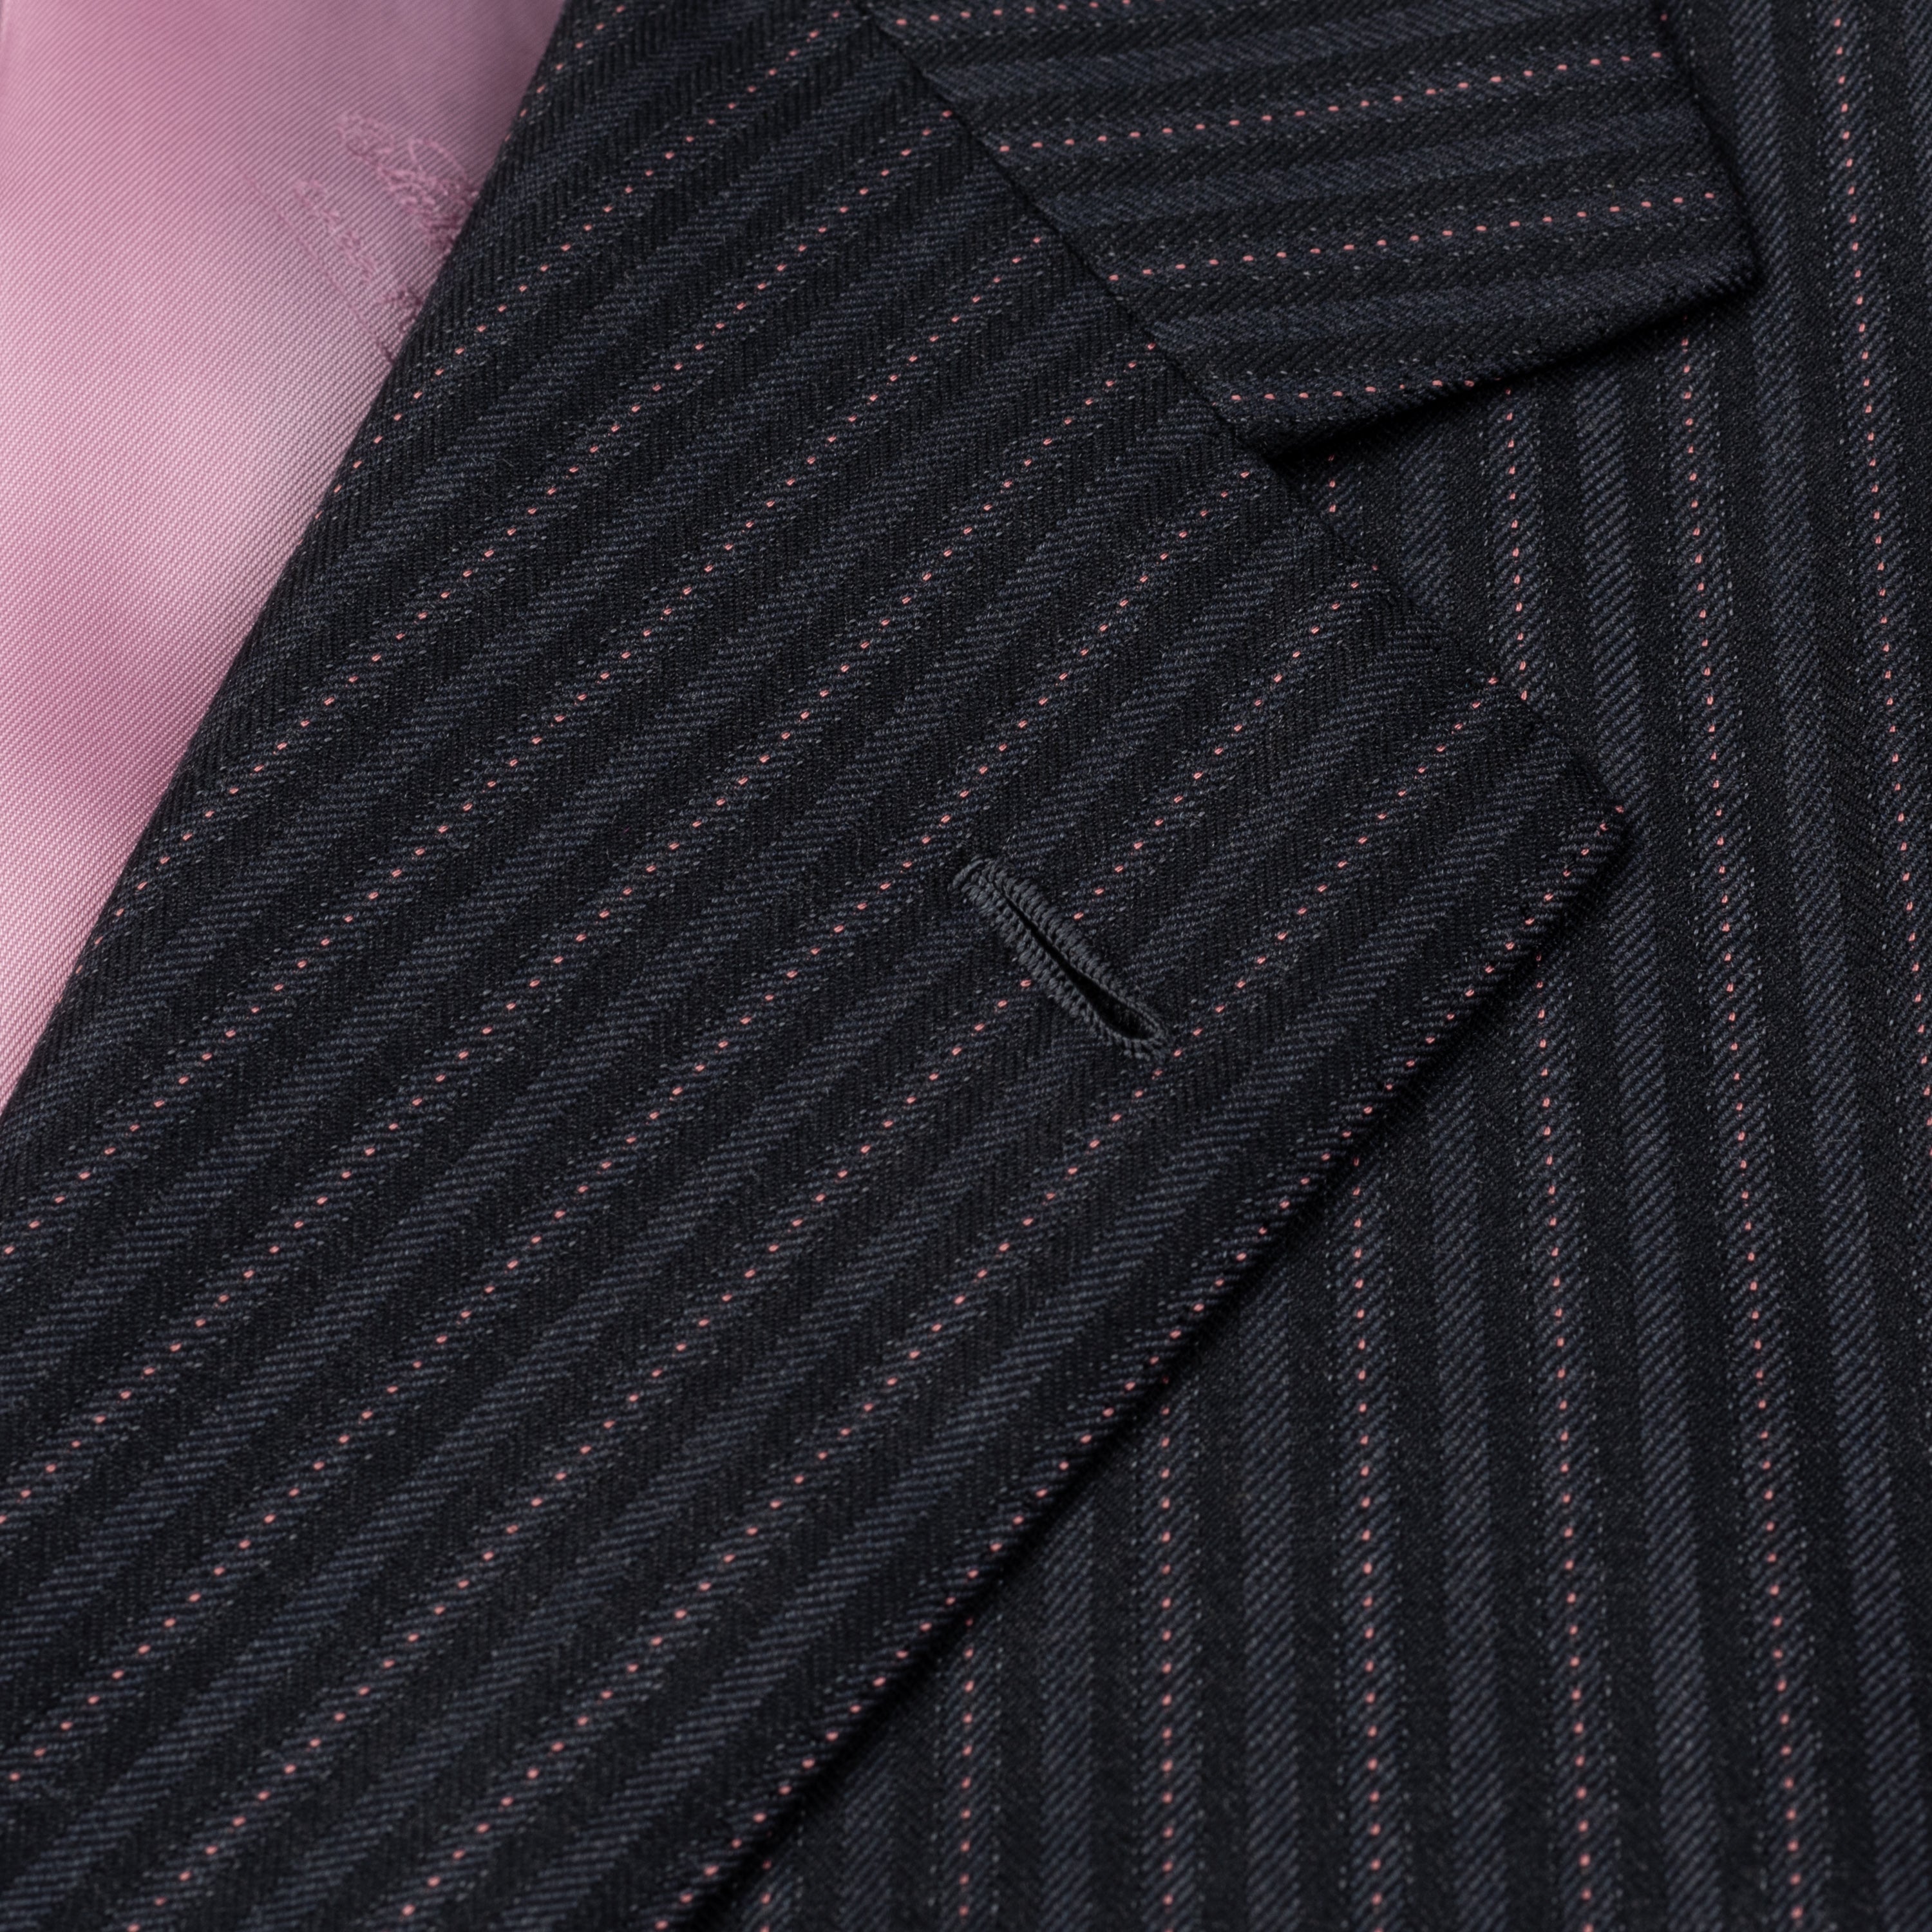 SARTORIA CASTANGIA Black Herringbone Striped Wool Super 130's Jacket 53 NEW 43 CASTANGIA